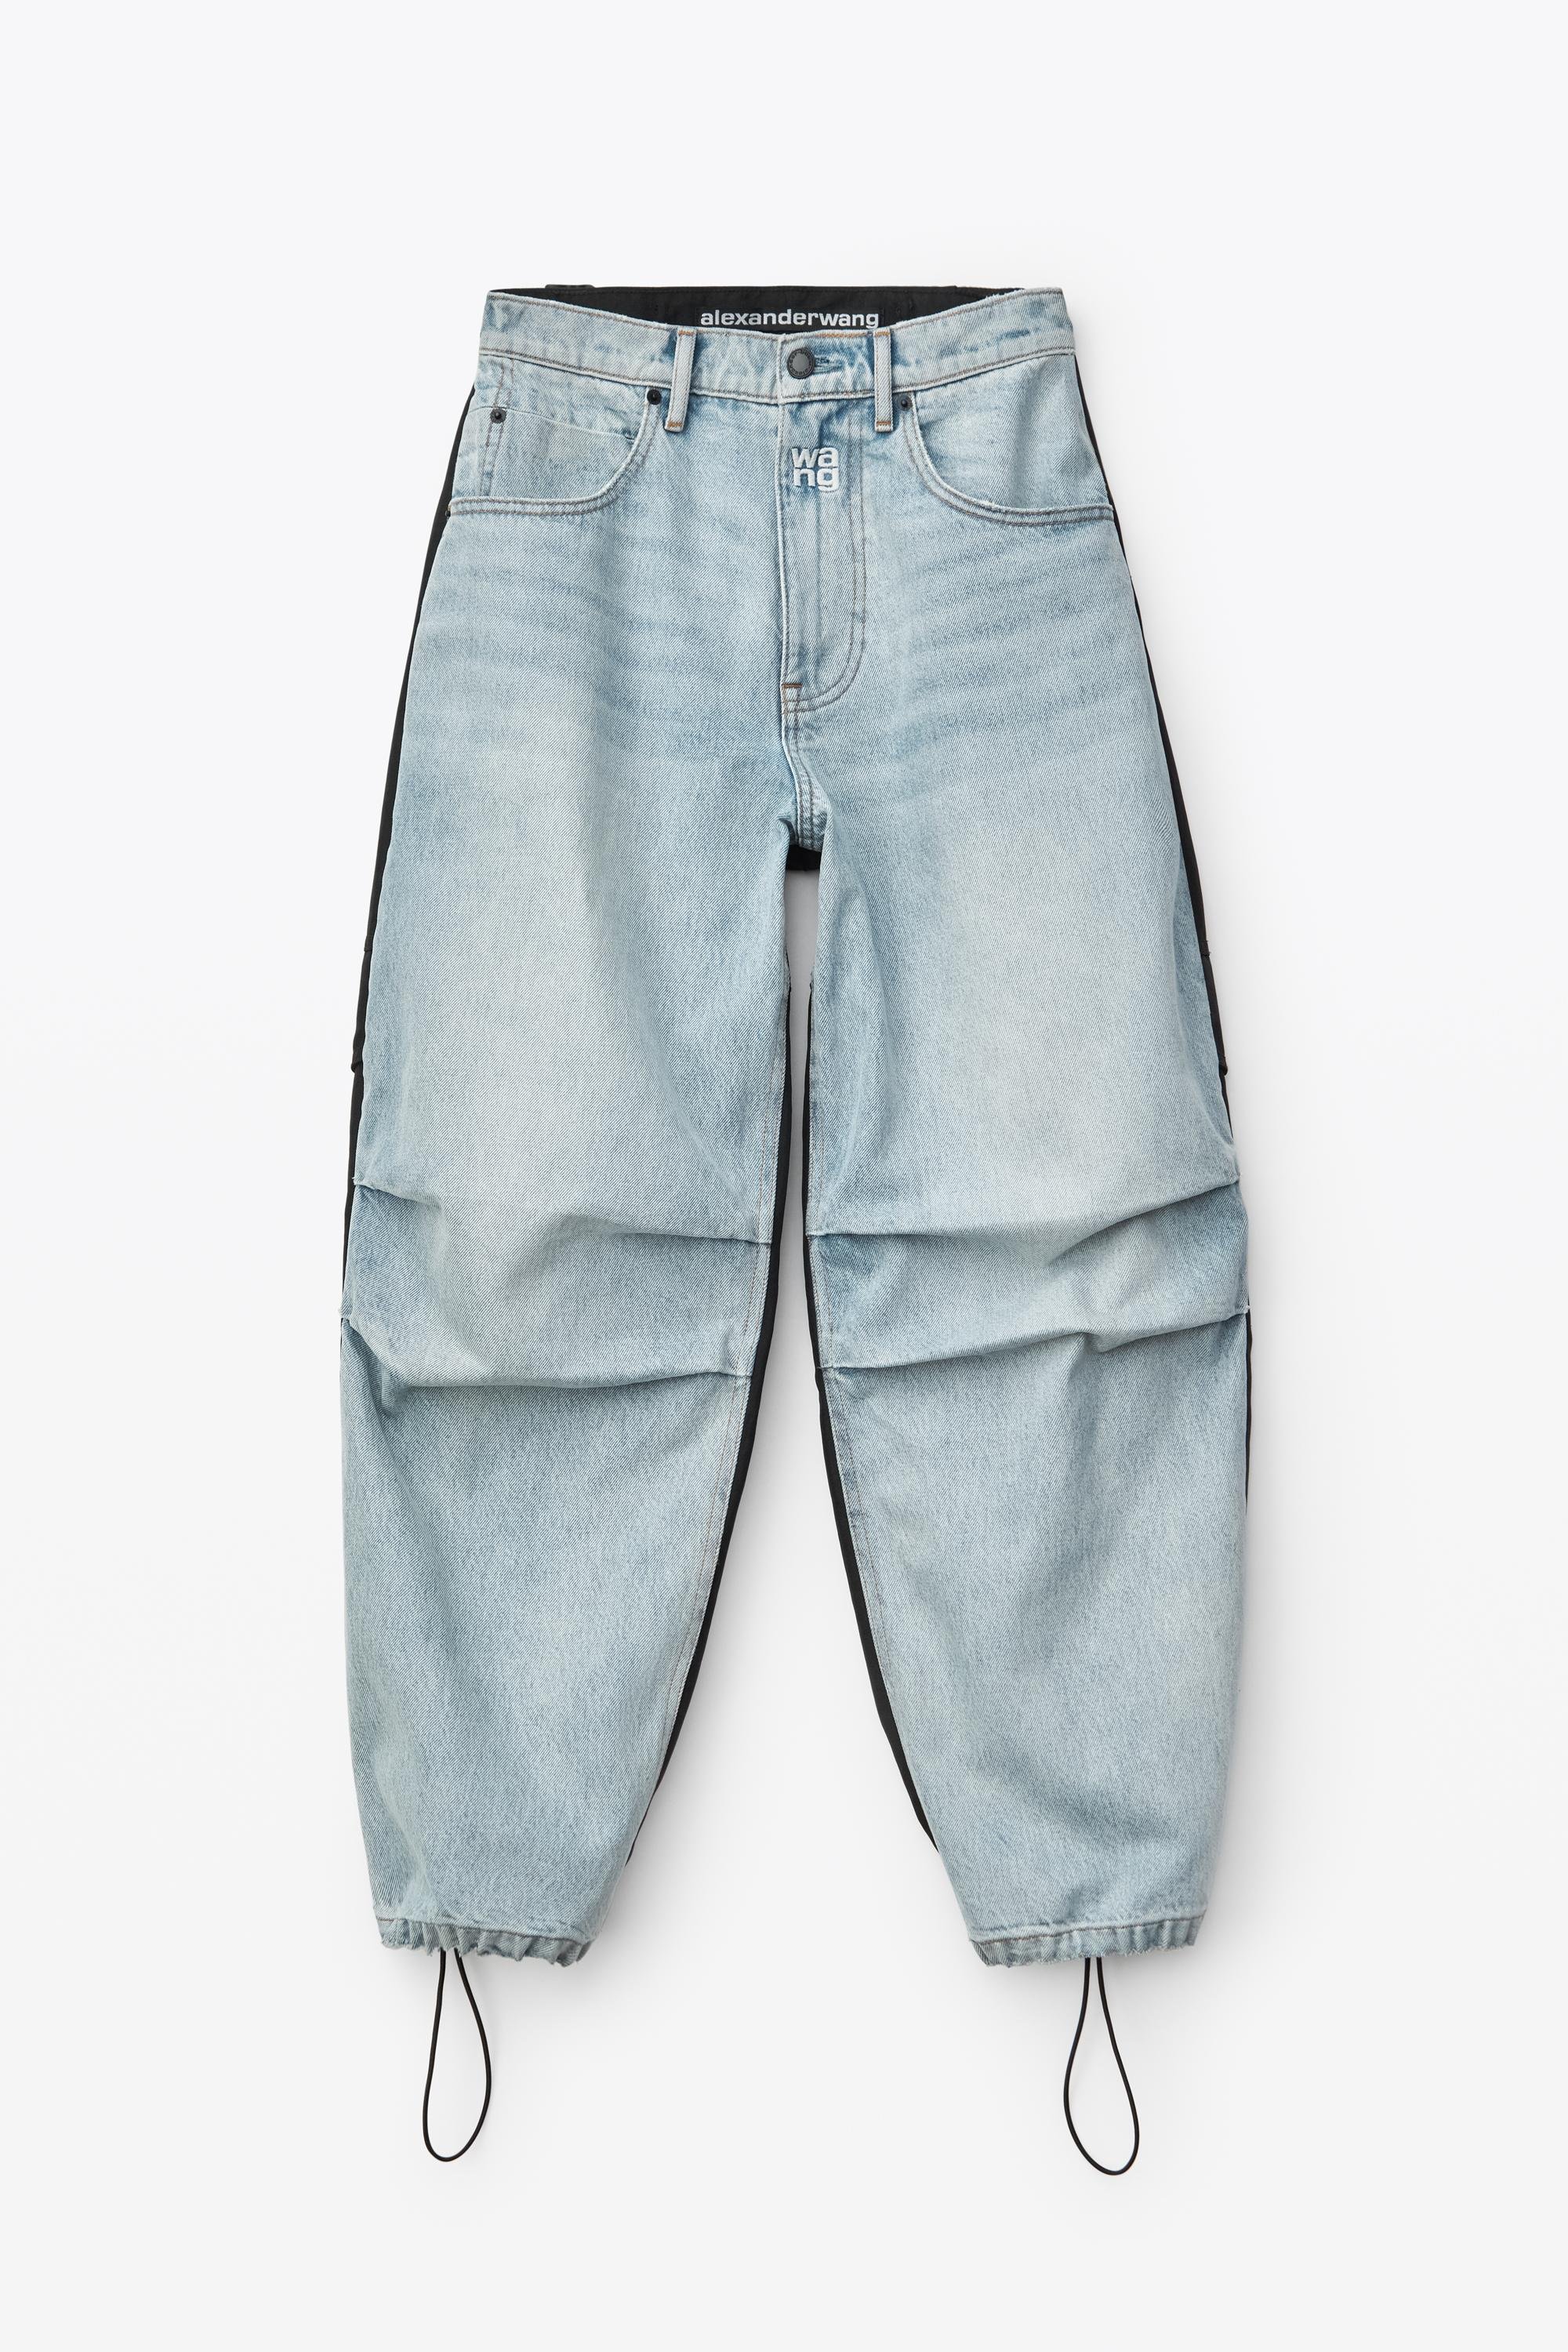 Alexander Wang jeans finally available - Kodd Magazine